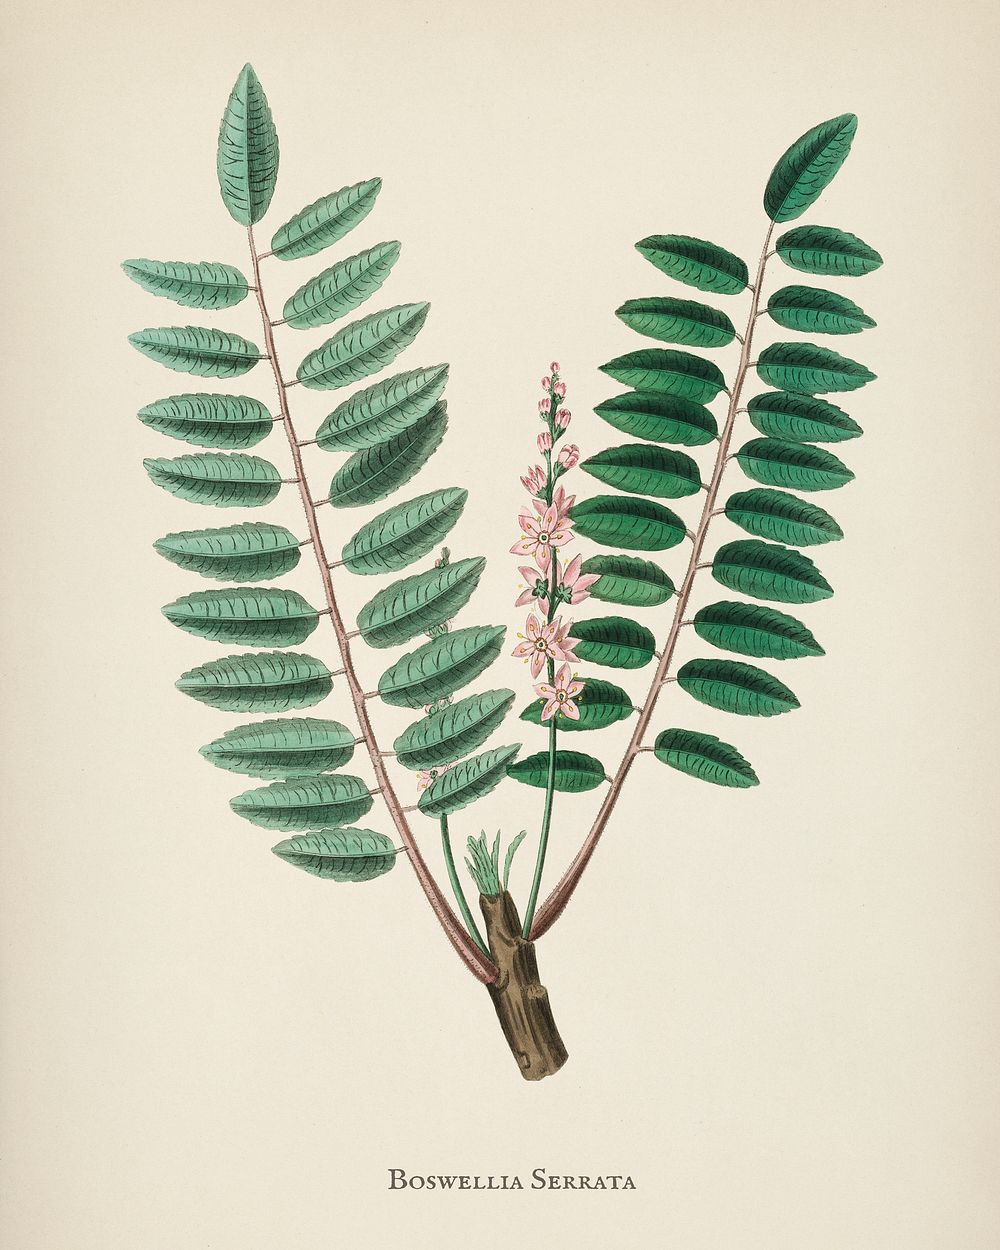 Boswellia serrata illustration from Medical Botany (1836) by John Stephenson and James Morss Churchill.